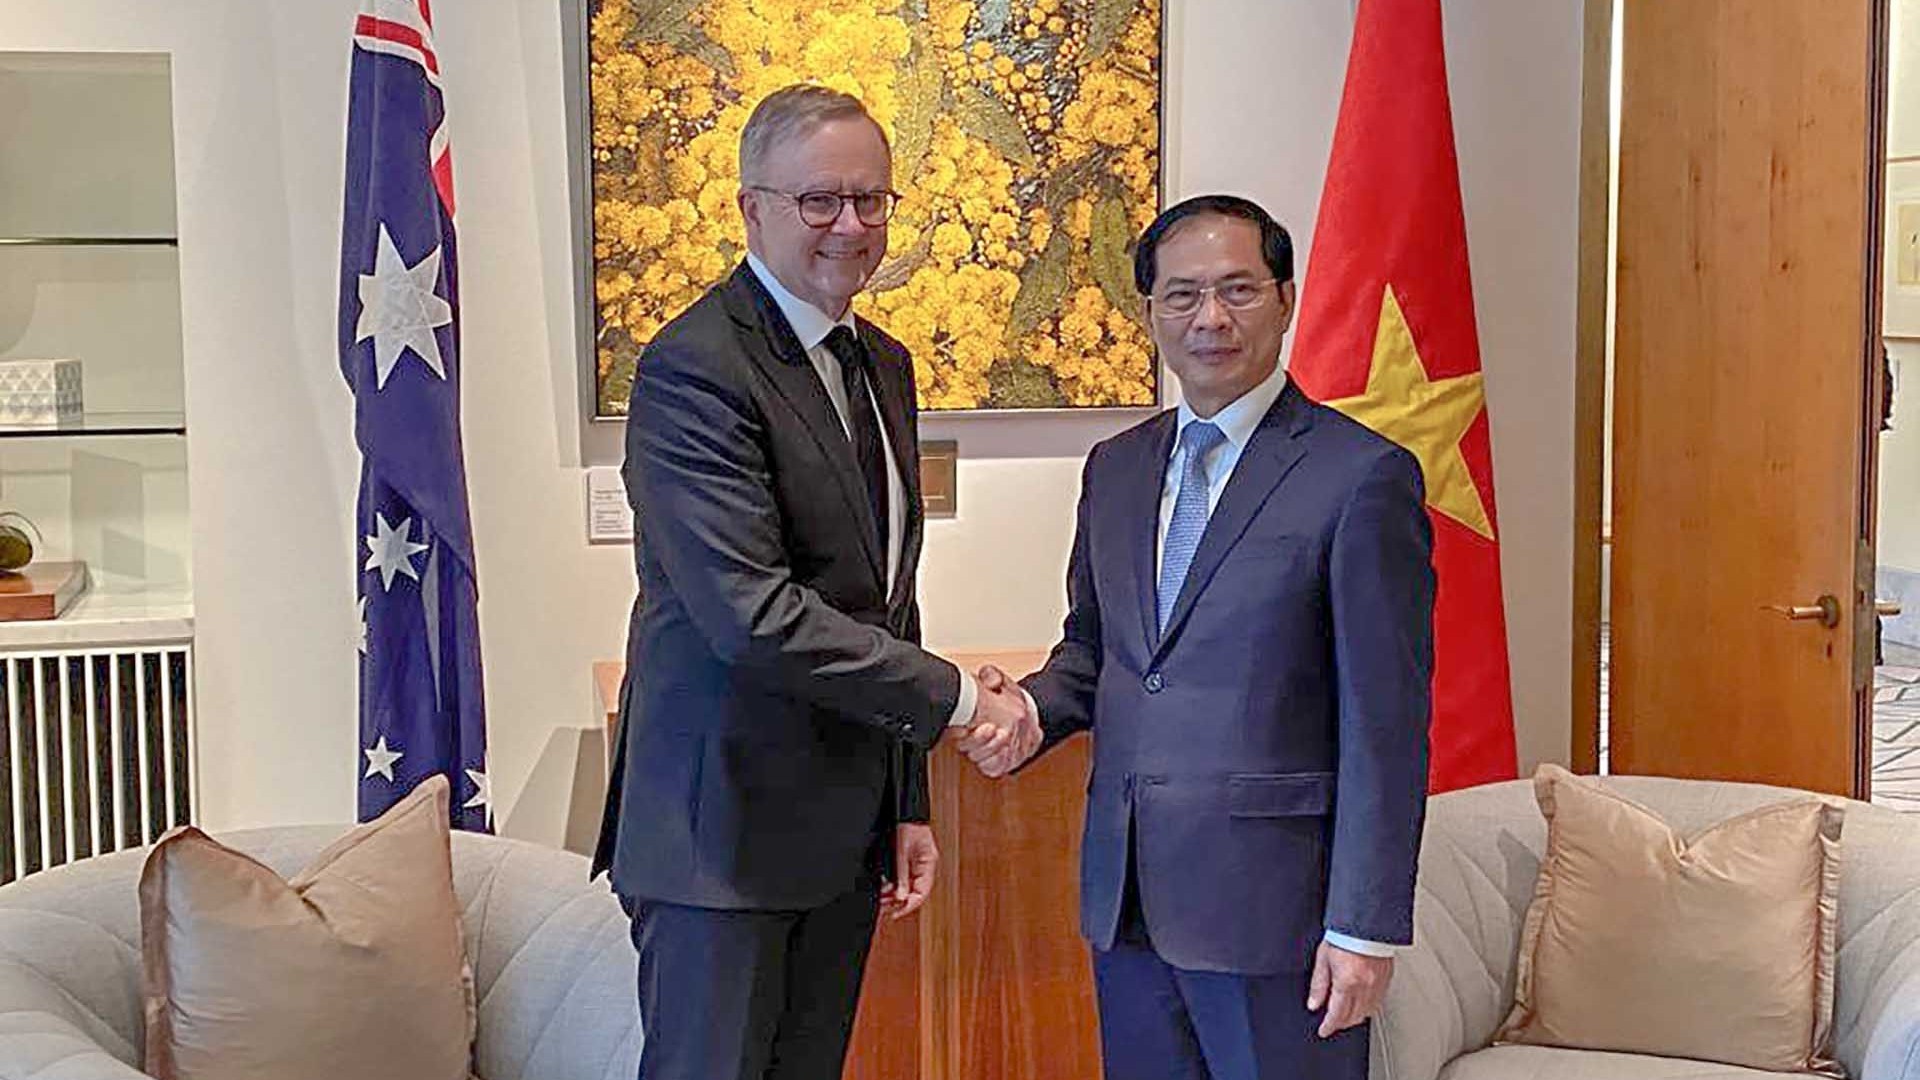 Australia considers Vietnam as important partner in the region